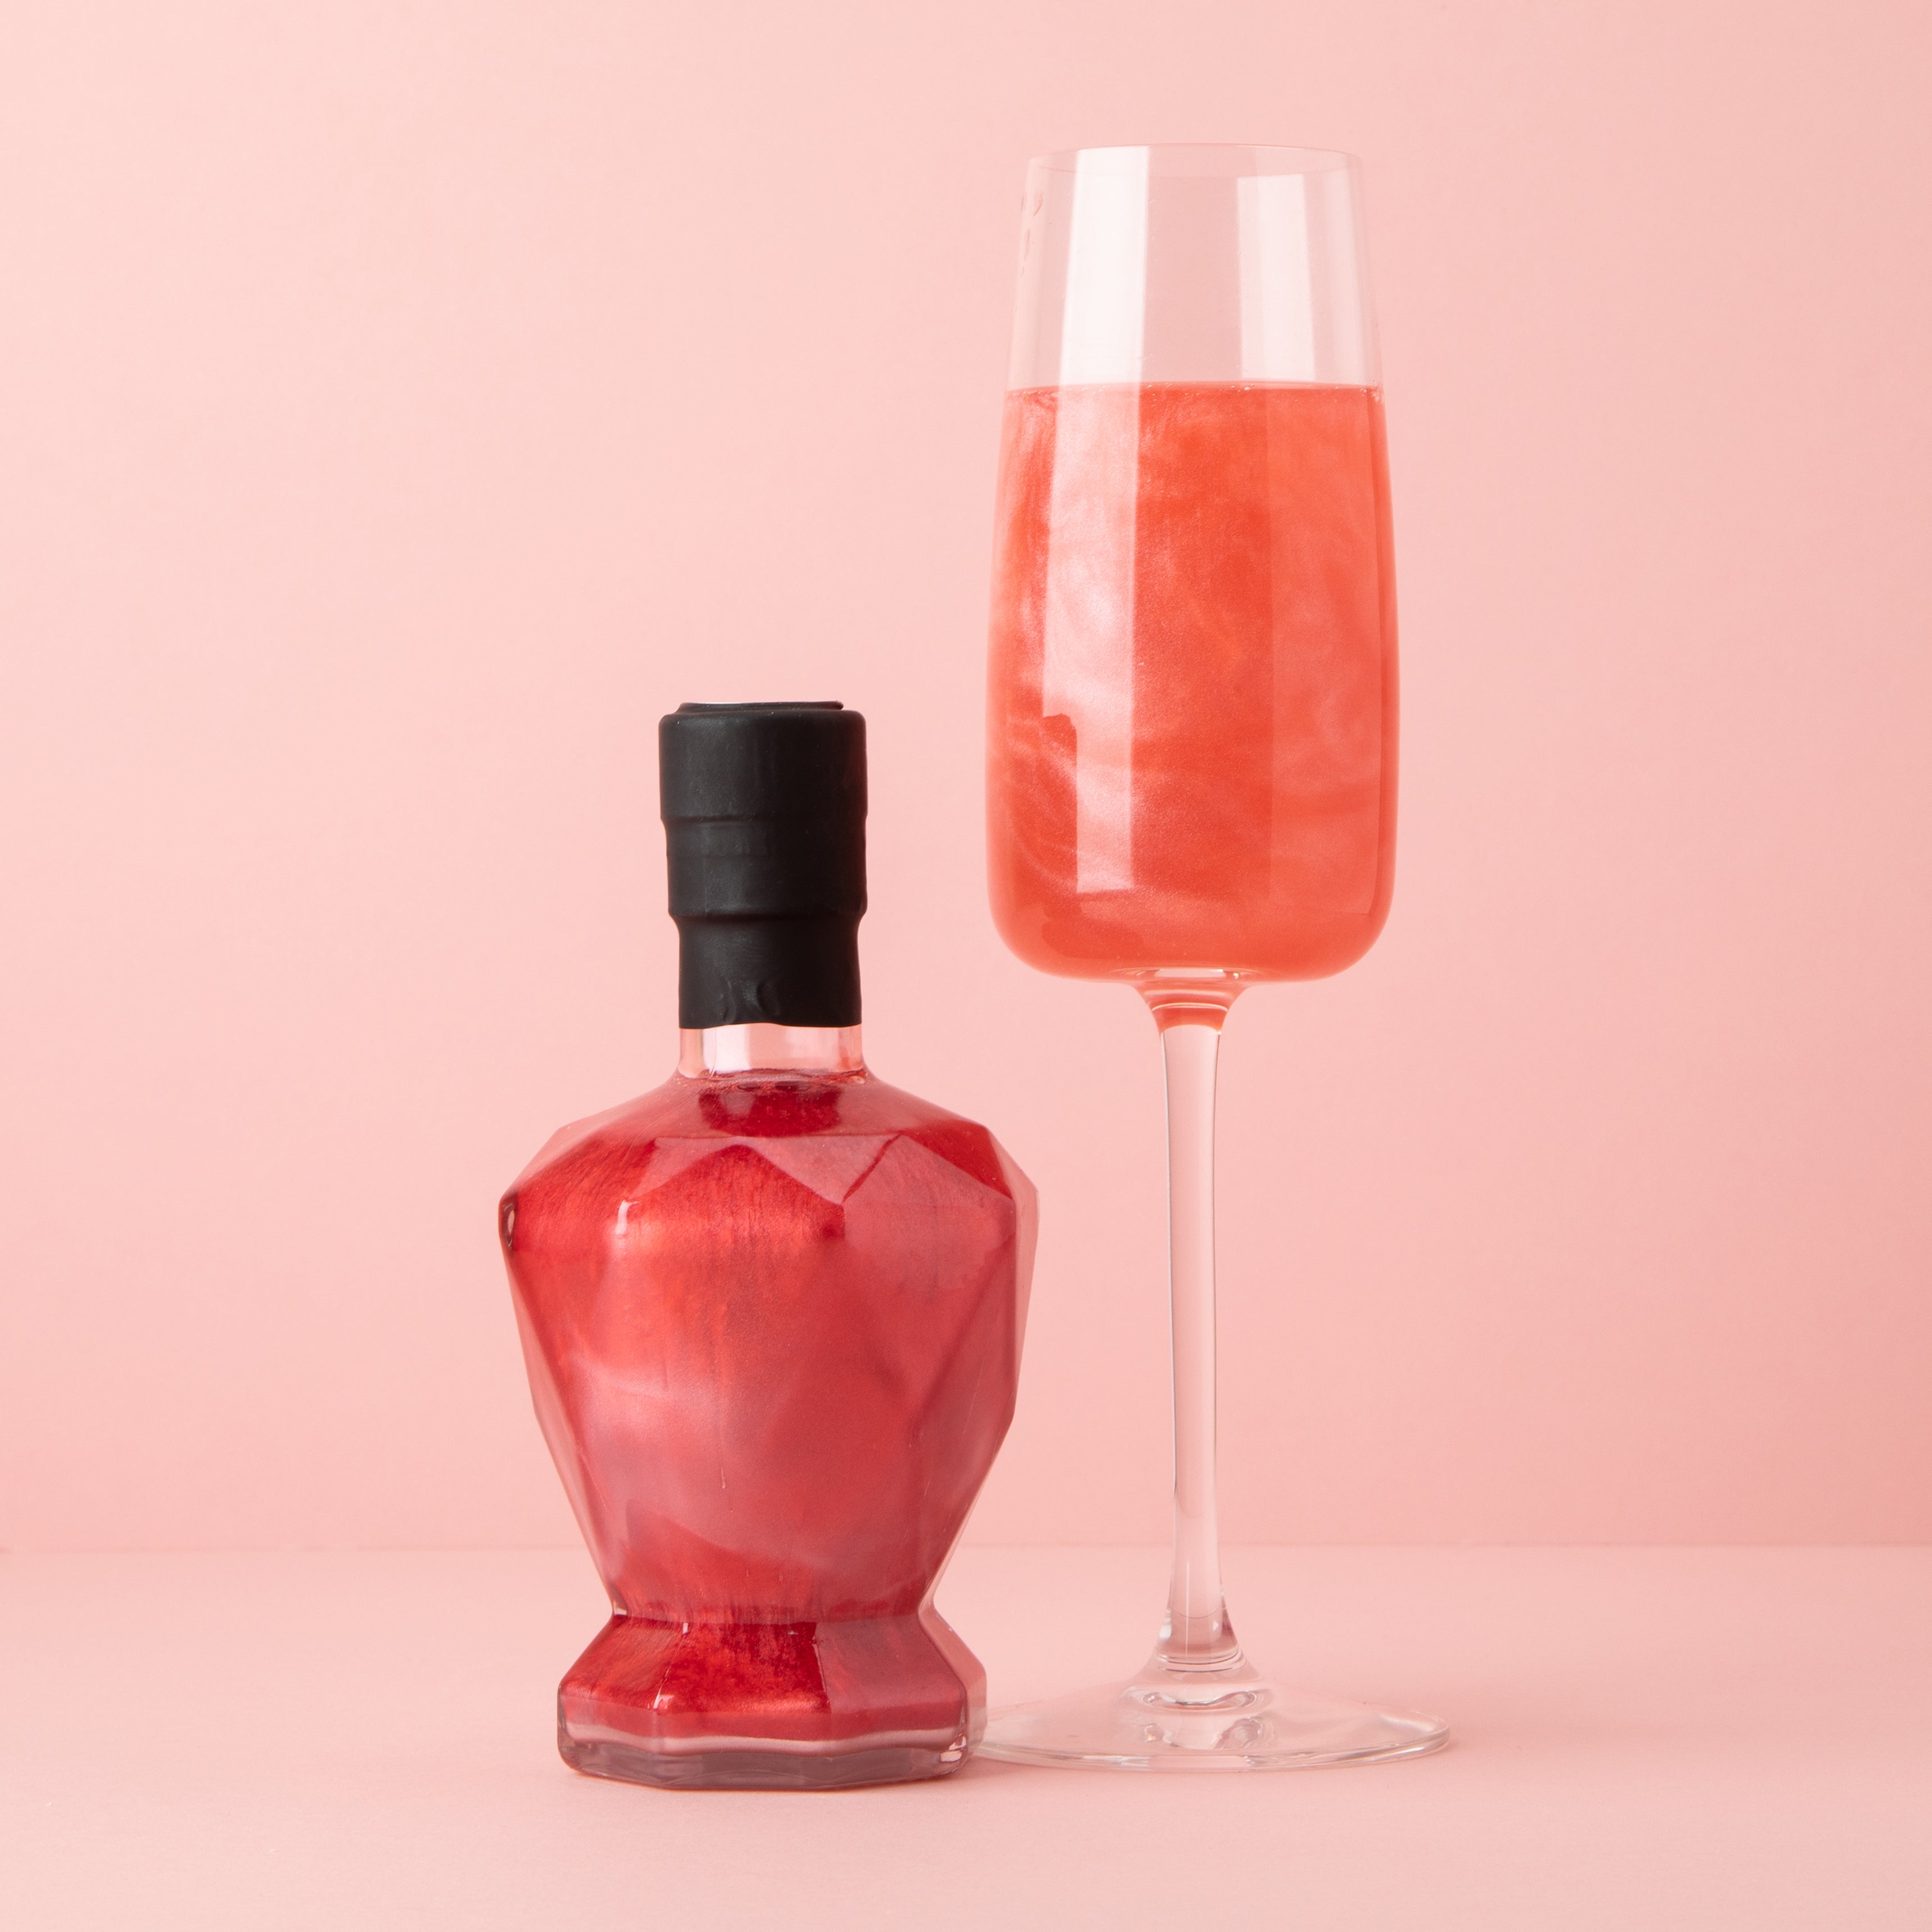 Raspberry & Peach Shimmer Syrup 200ml Diamond Bottle